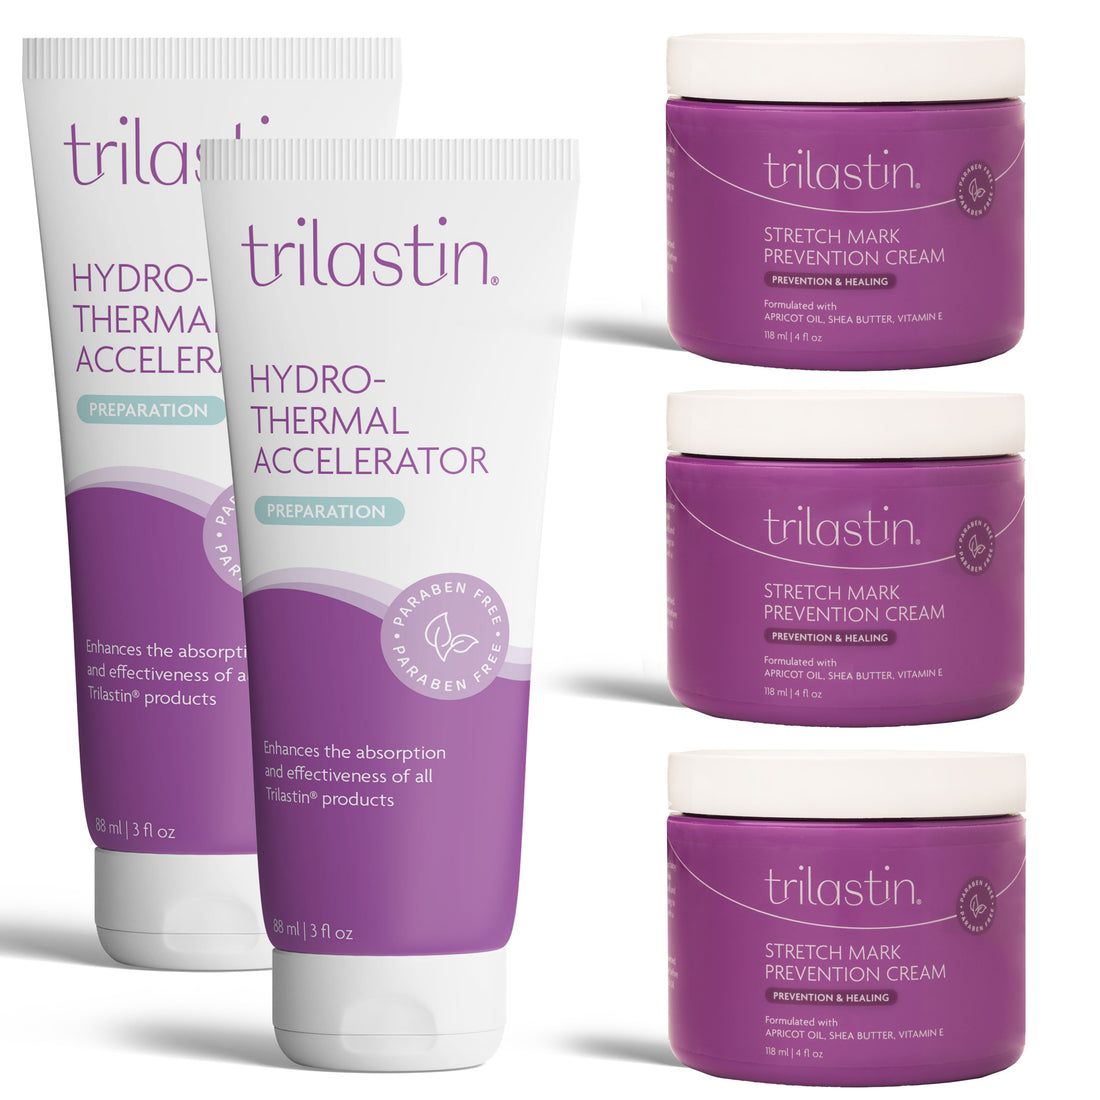 TriLASTIN Stretch Mark Prevention Hydration Duo - 3 month supply - TriLASTIN